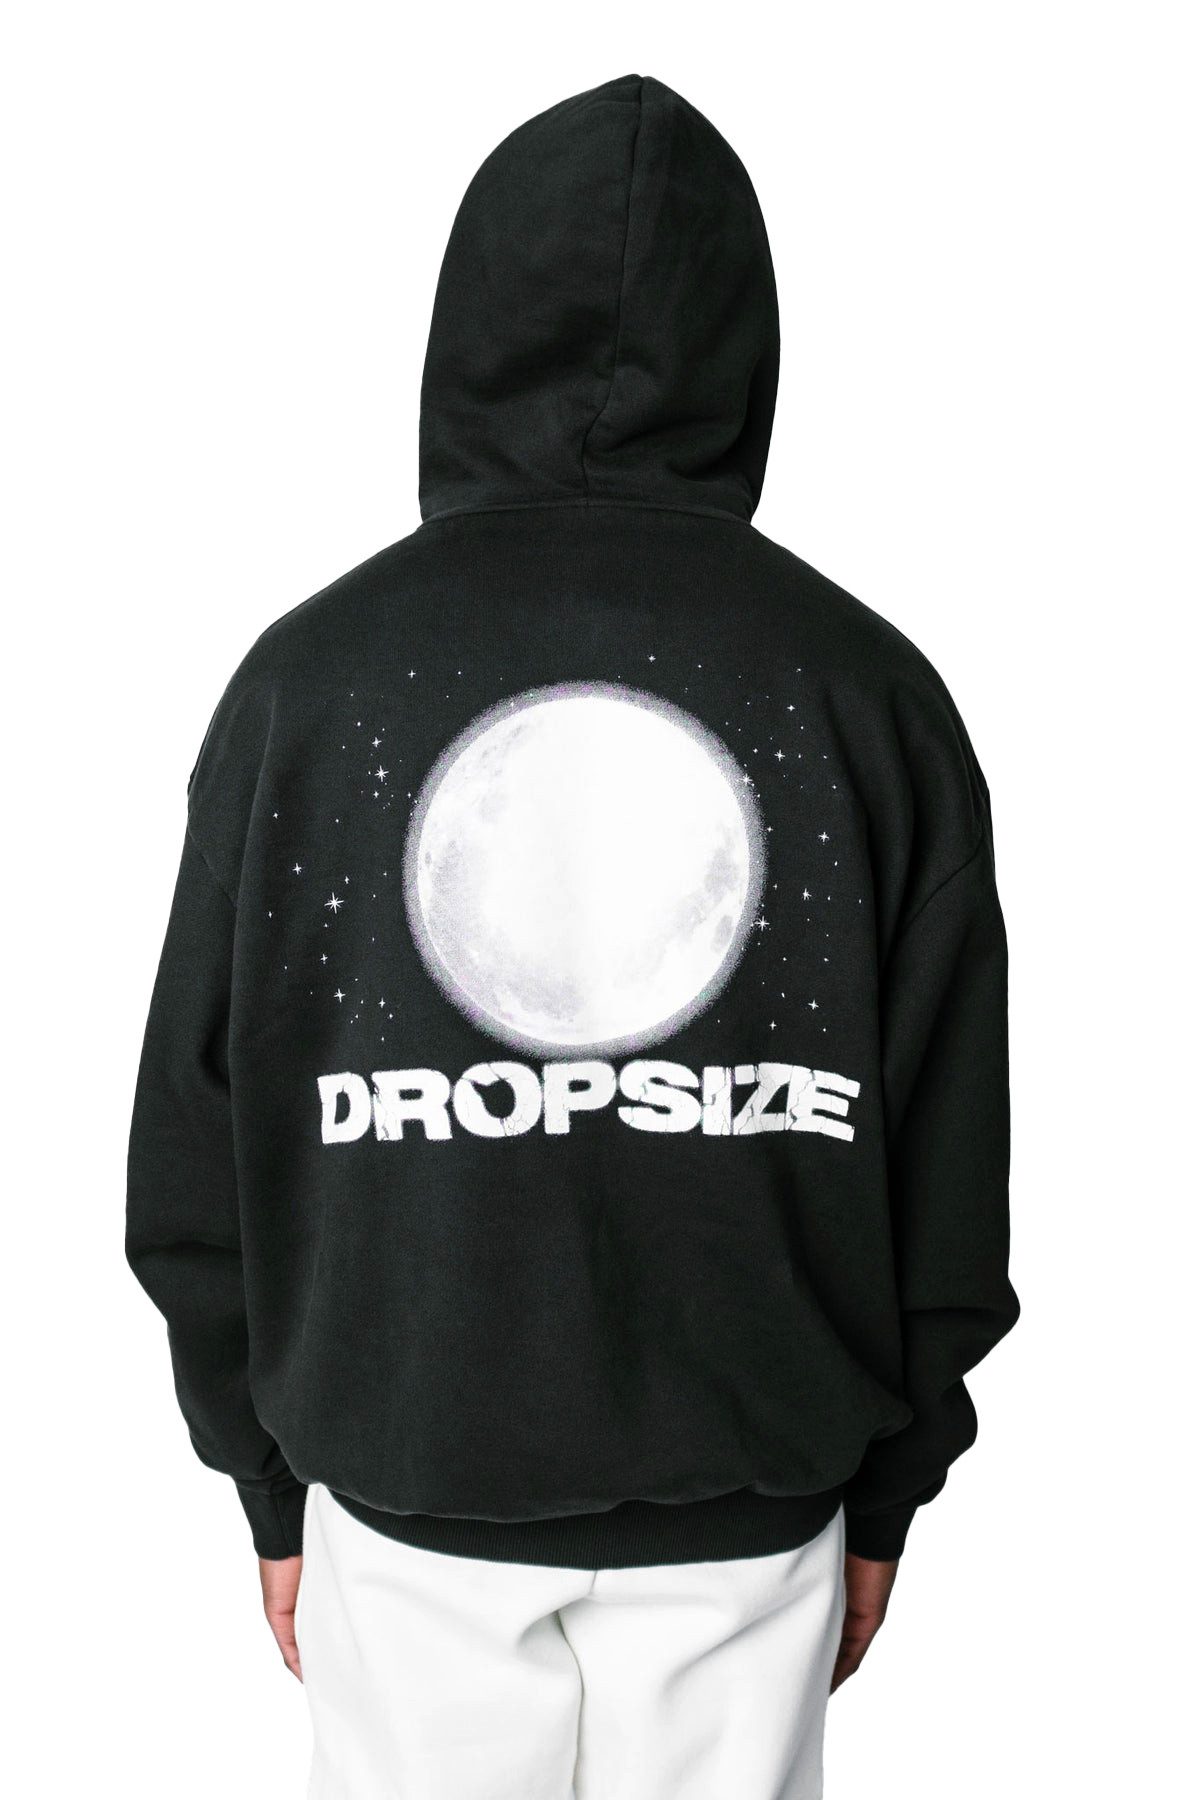 Dropsize Hoodie Heavy Moon Design L